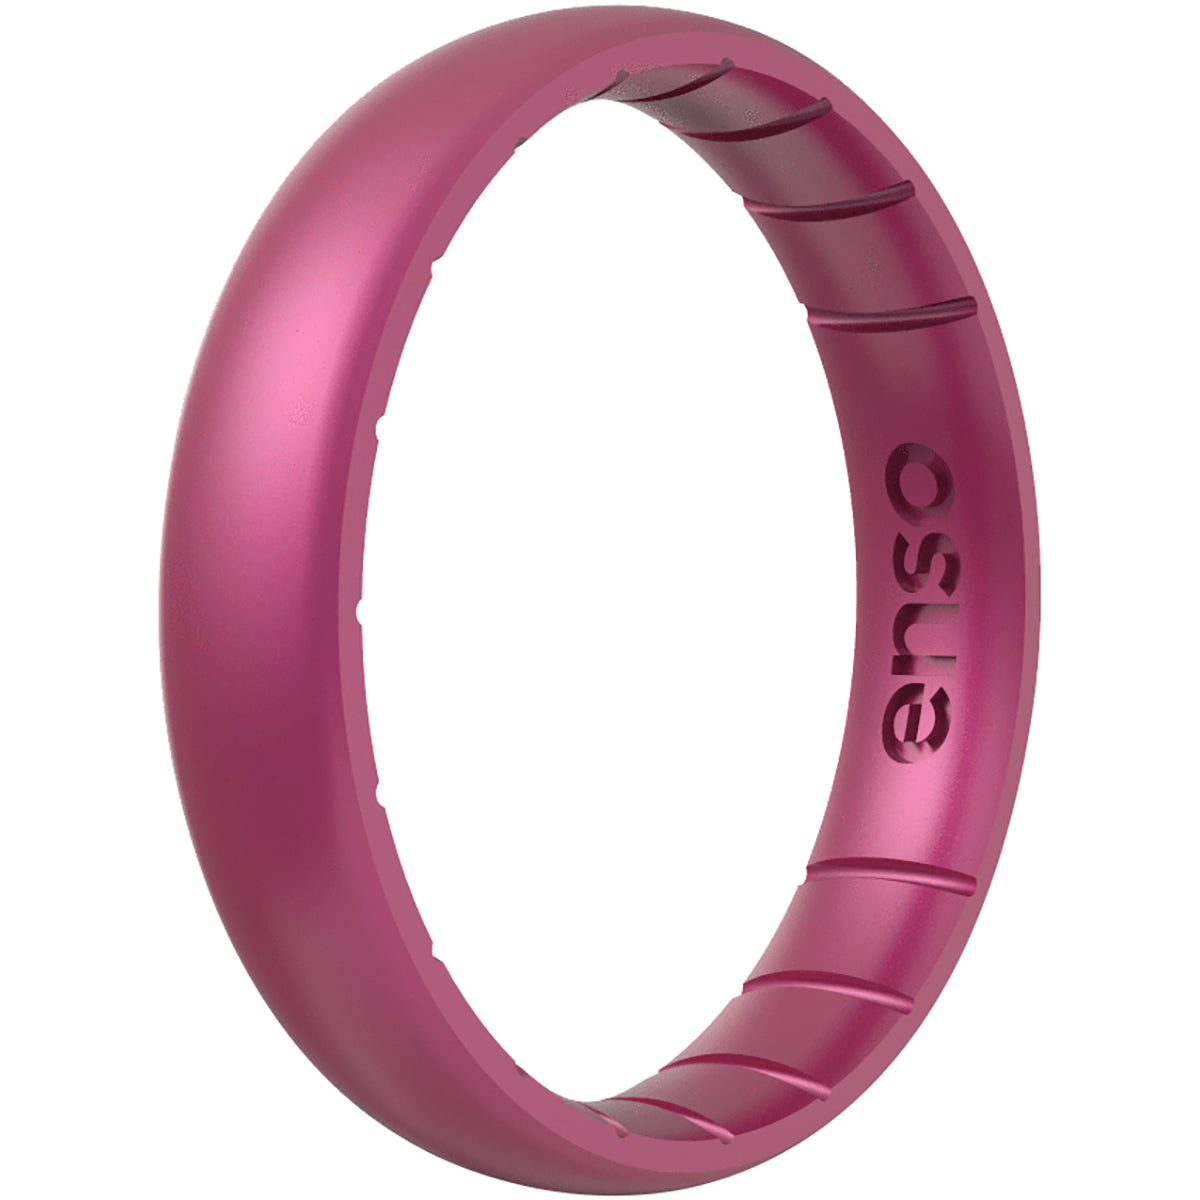 Enso Rings Thin Birthstone Series Silicone Ring - Pink Tourmaline Enso Rings